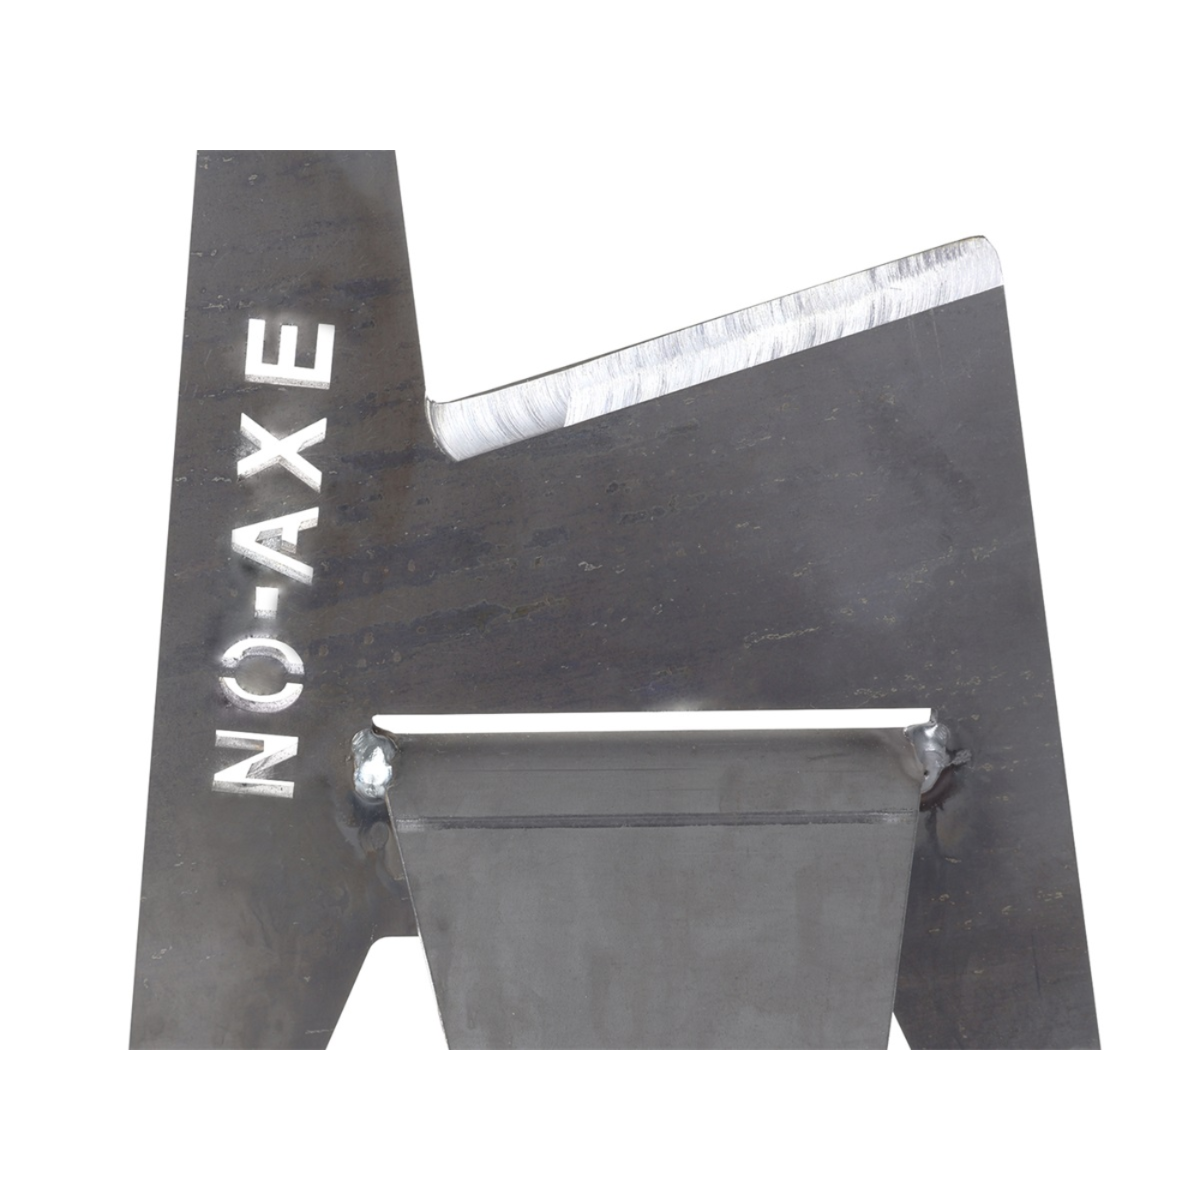 NO-AXE Log Splitter Blank Steel with Hammer